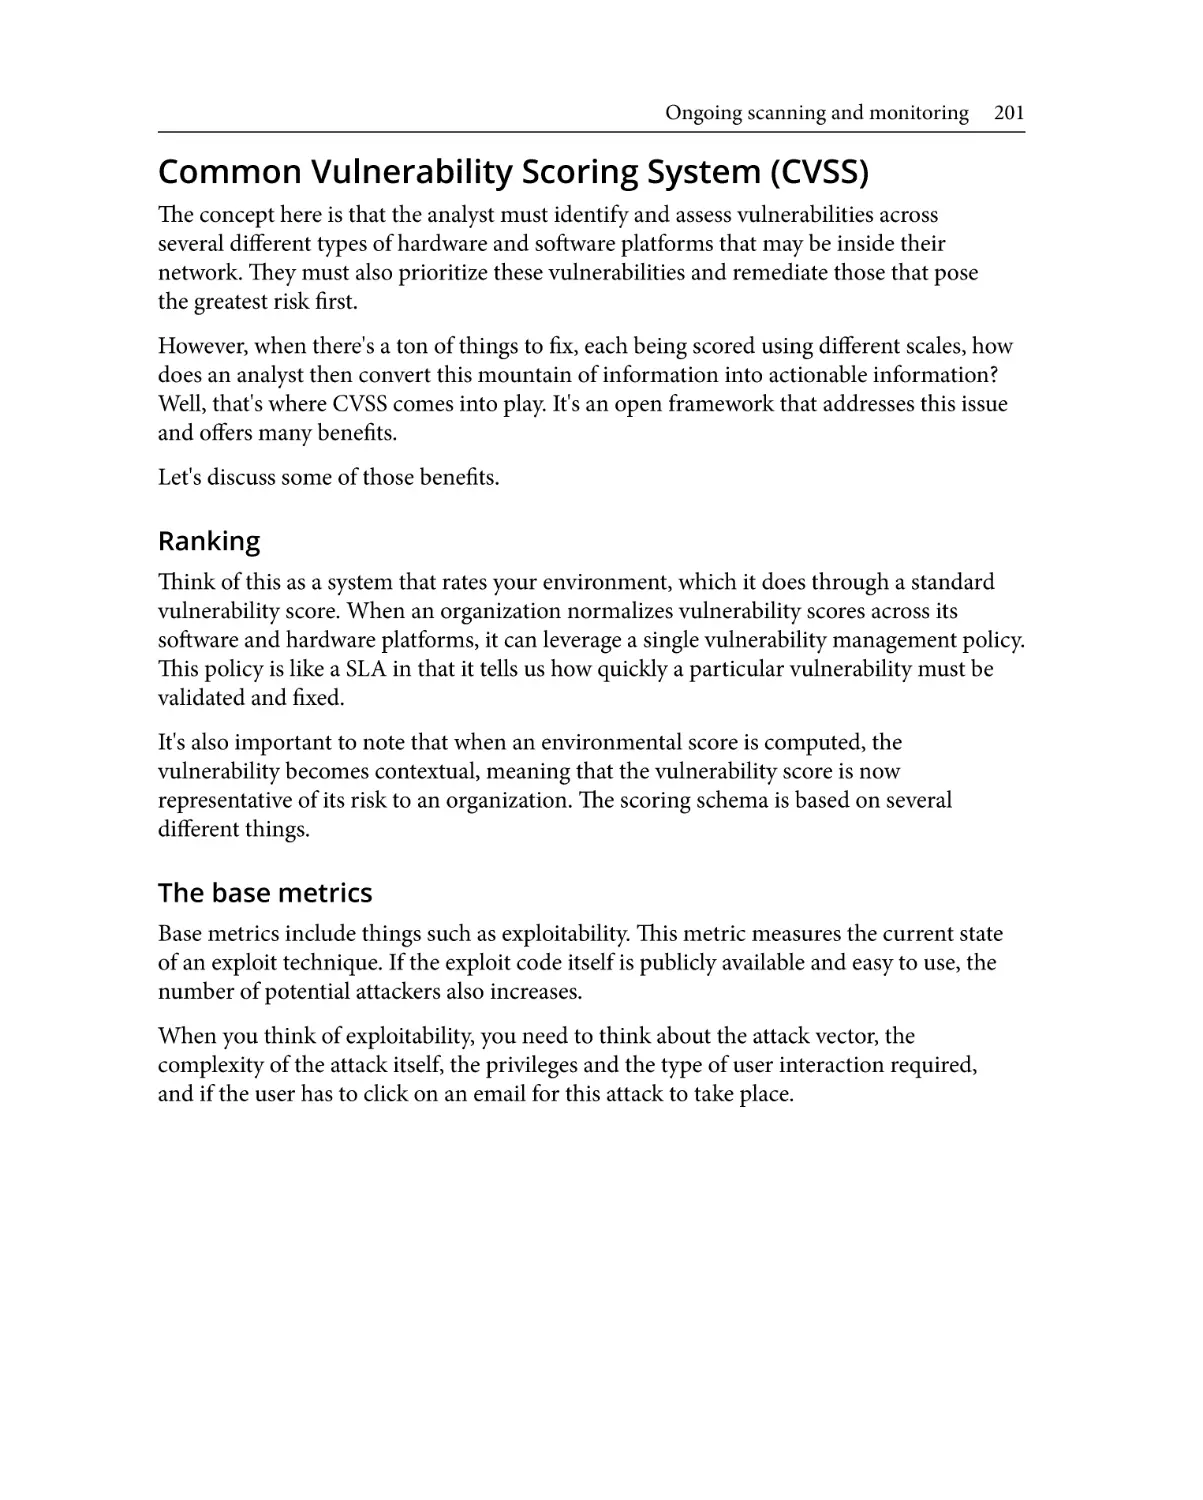 Common Vulnerability Scoring System (CVSS)